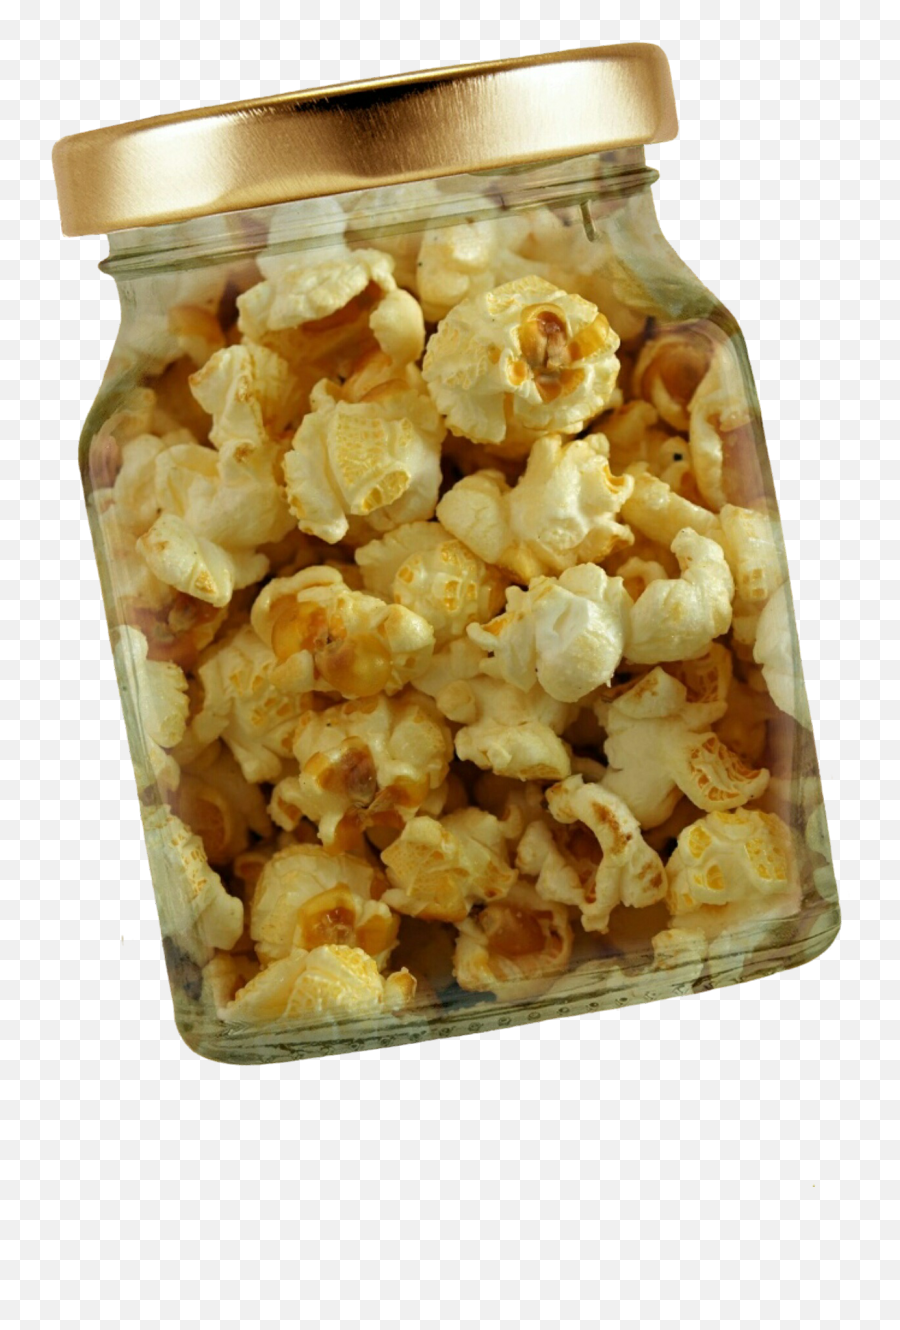 Popcorn In Jar Png Image - Purepng Free Transparent Cc0 Popcorn In Jar Emoji,Jar Png